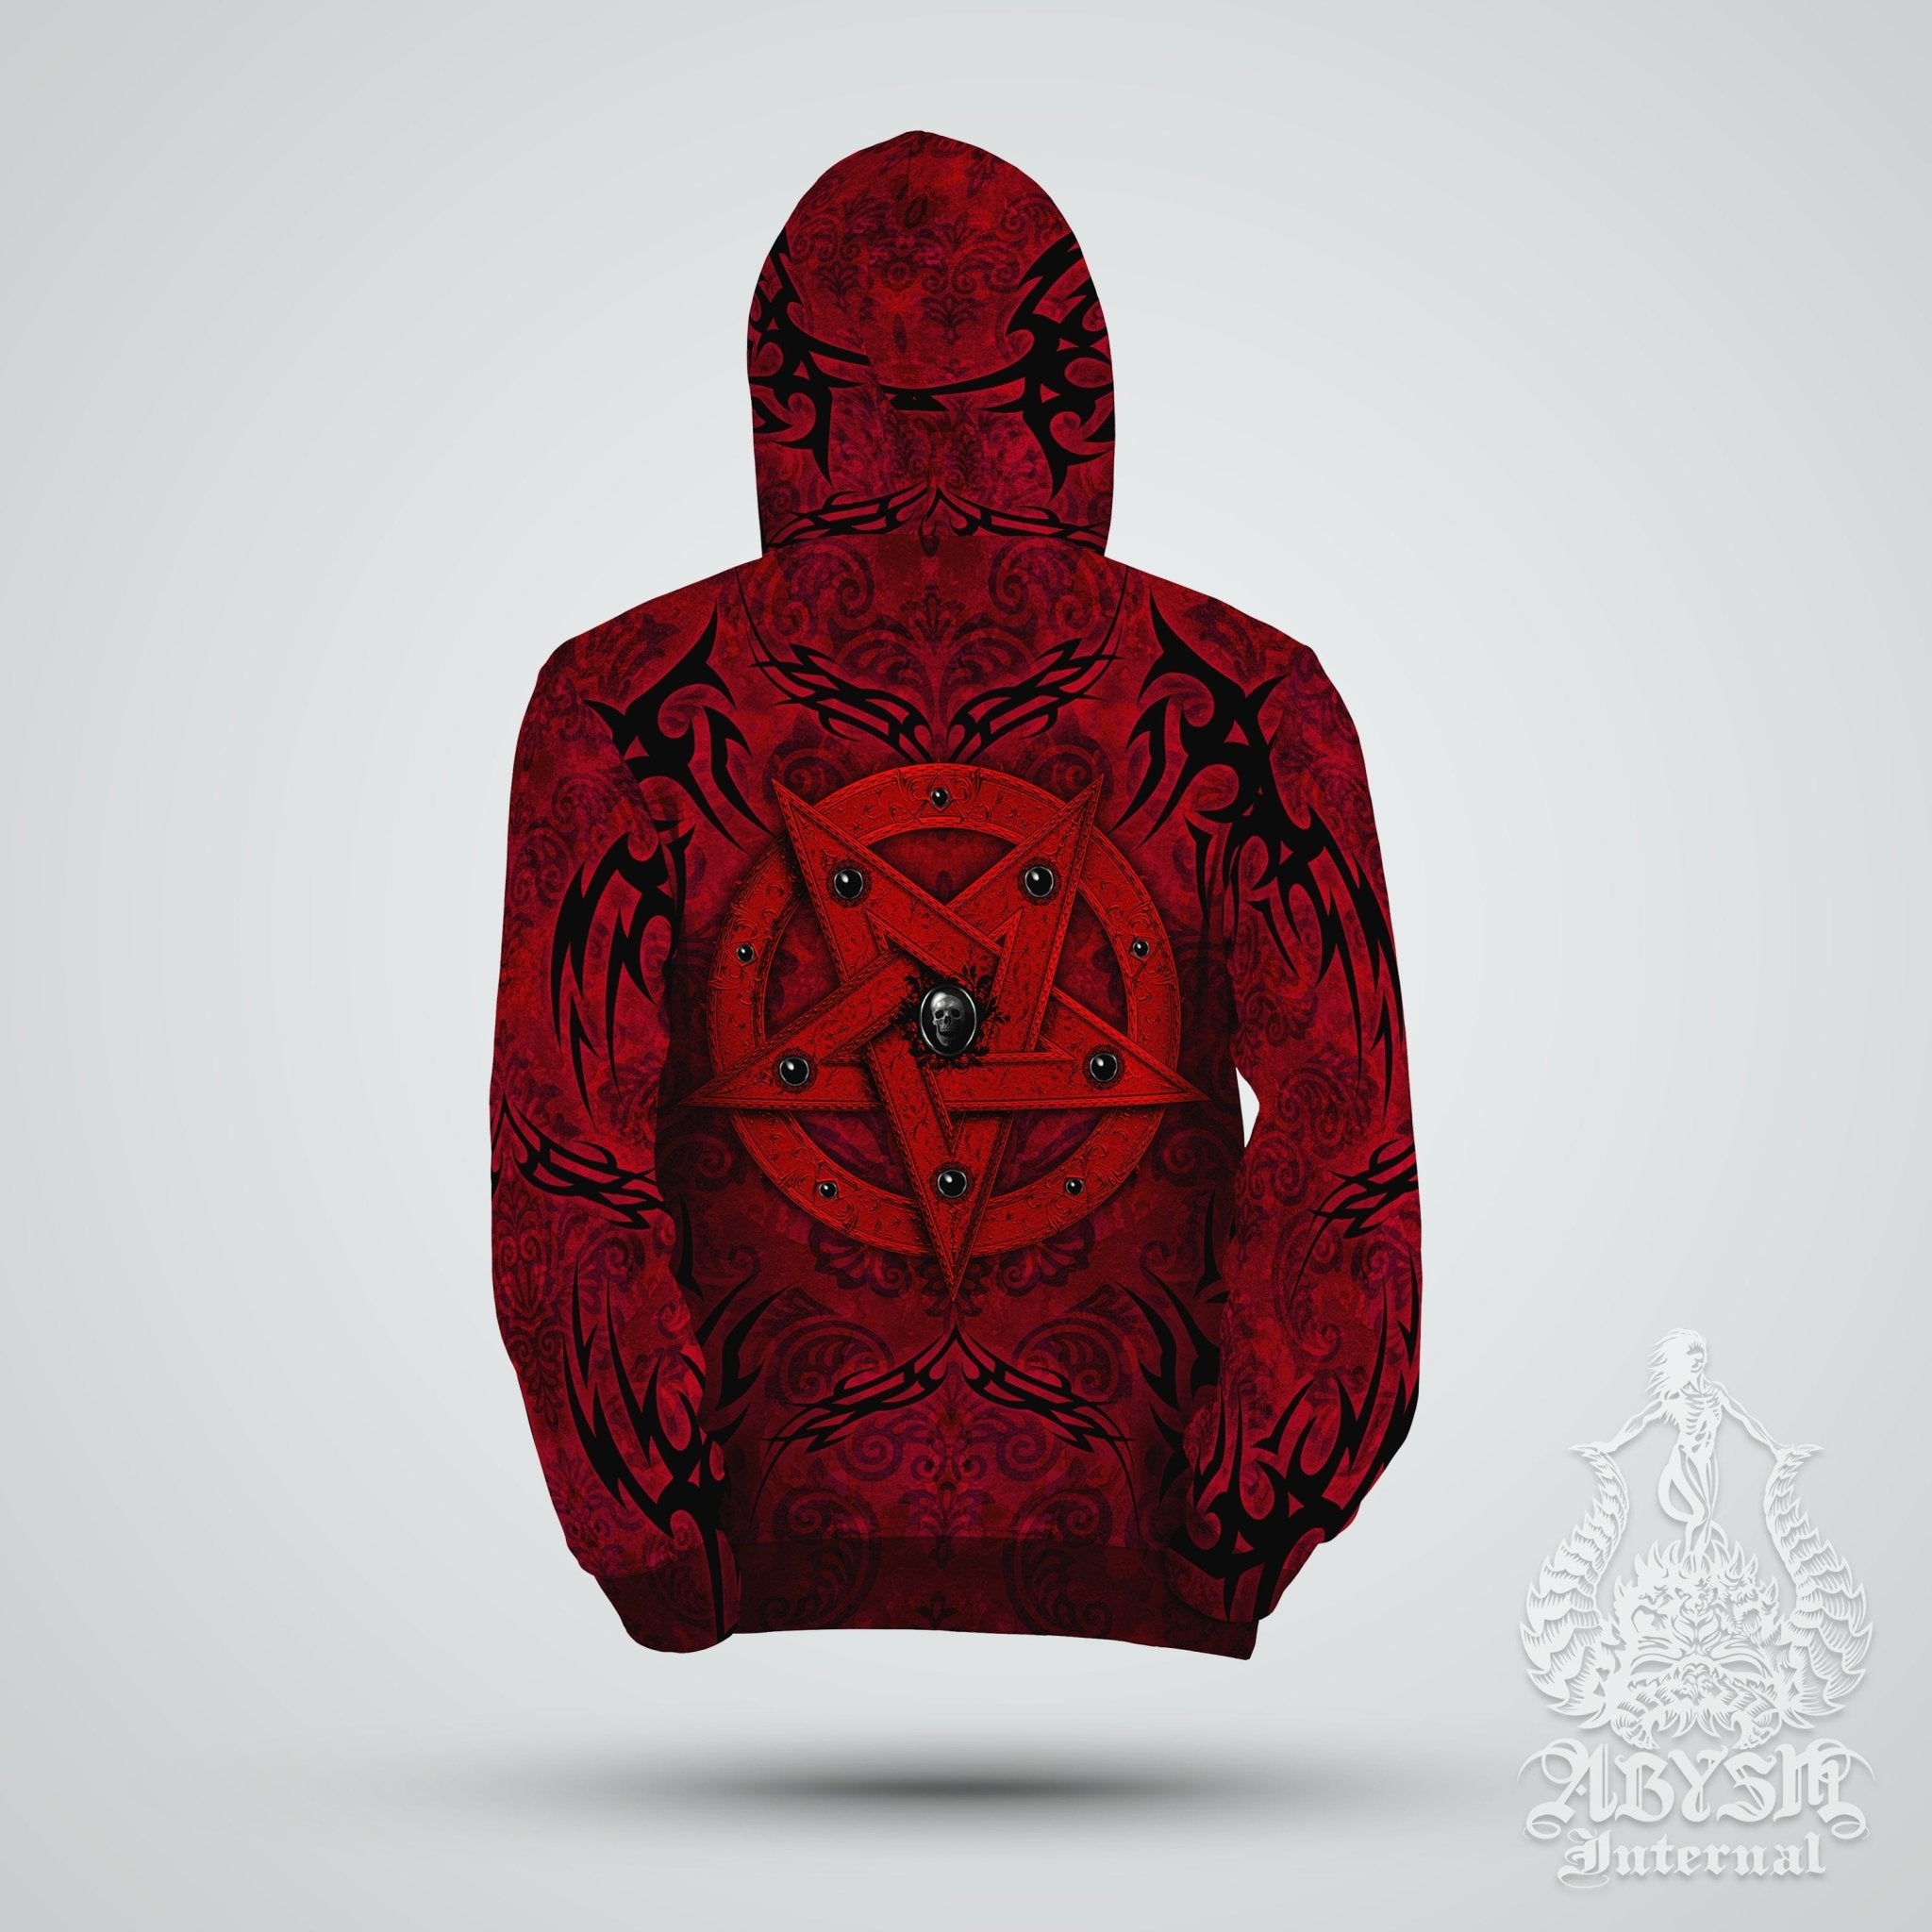 Pentagram Hoodie, Black Metal Streetwear, Gothic Sweater, Satanic Goth Outfit, Alternative Clothing, Unisex - Red on Red - Abysm Internal